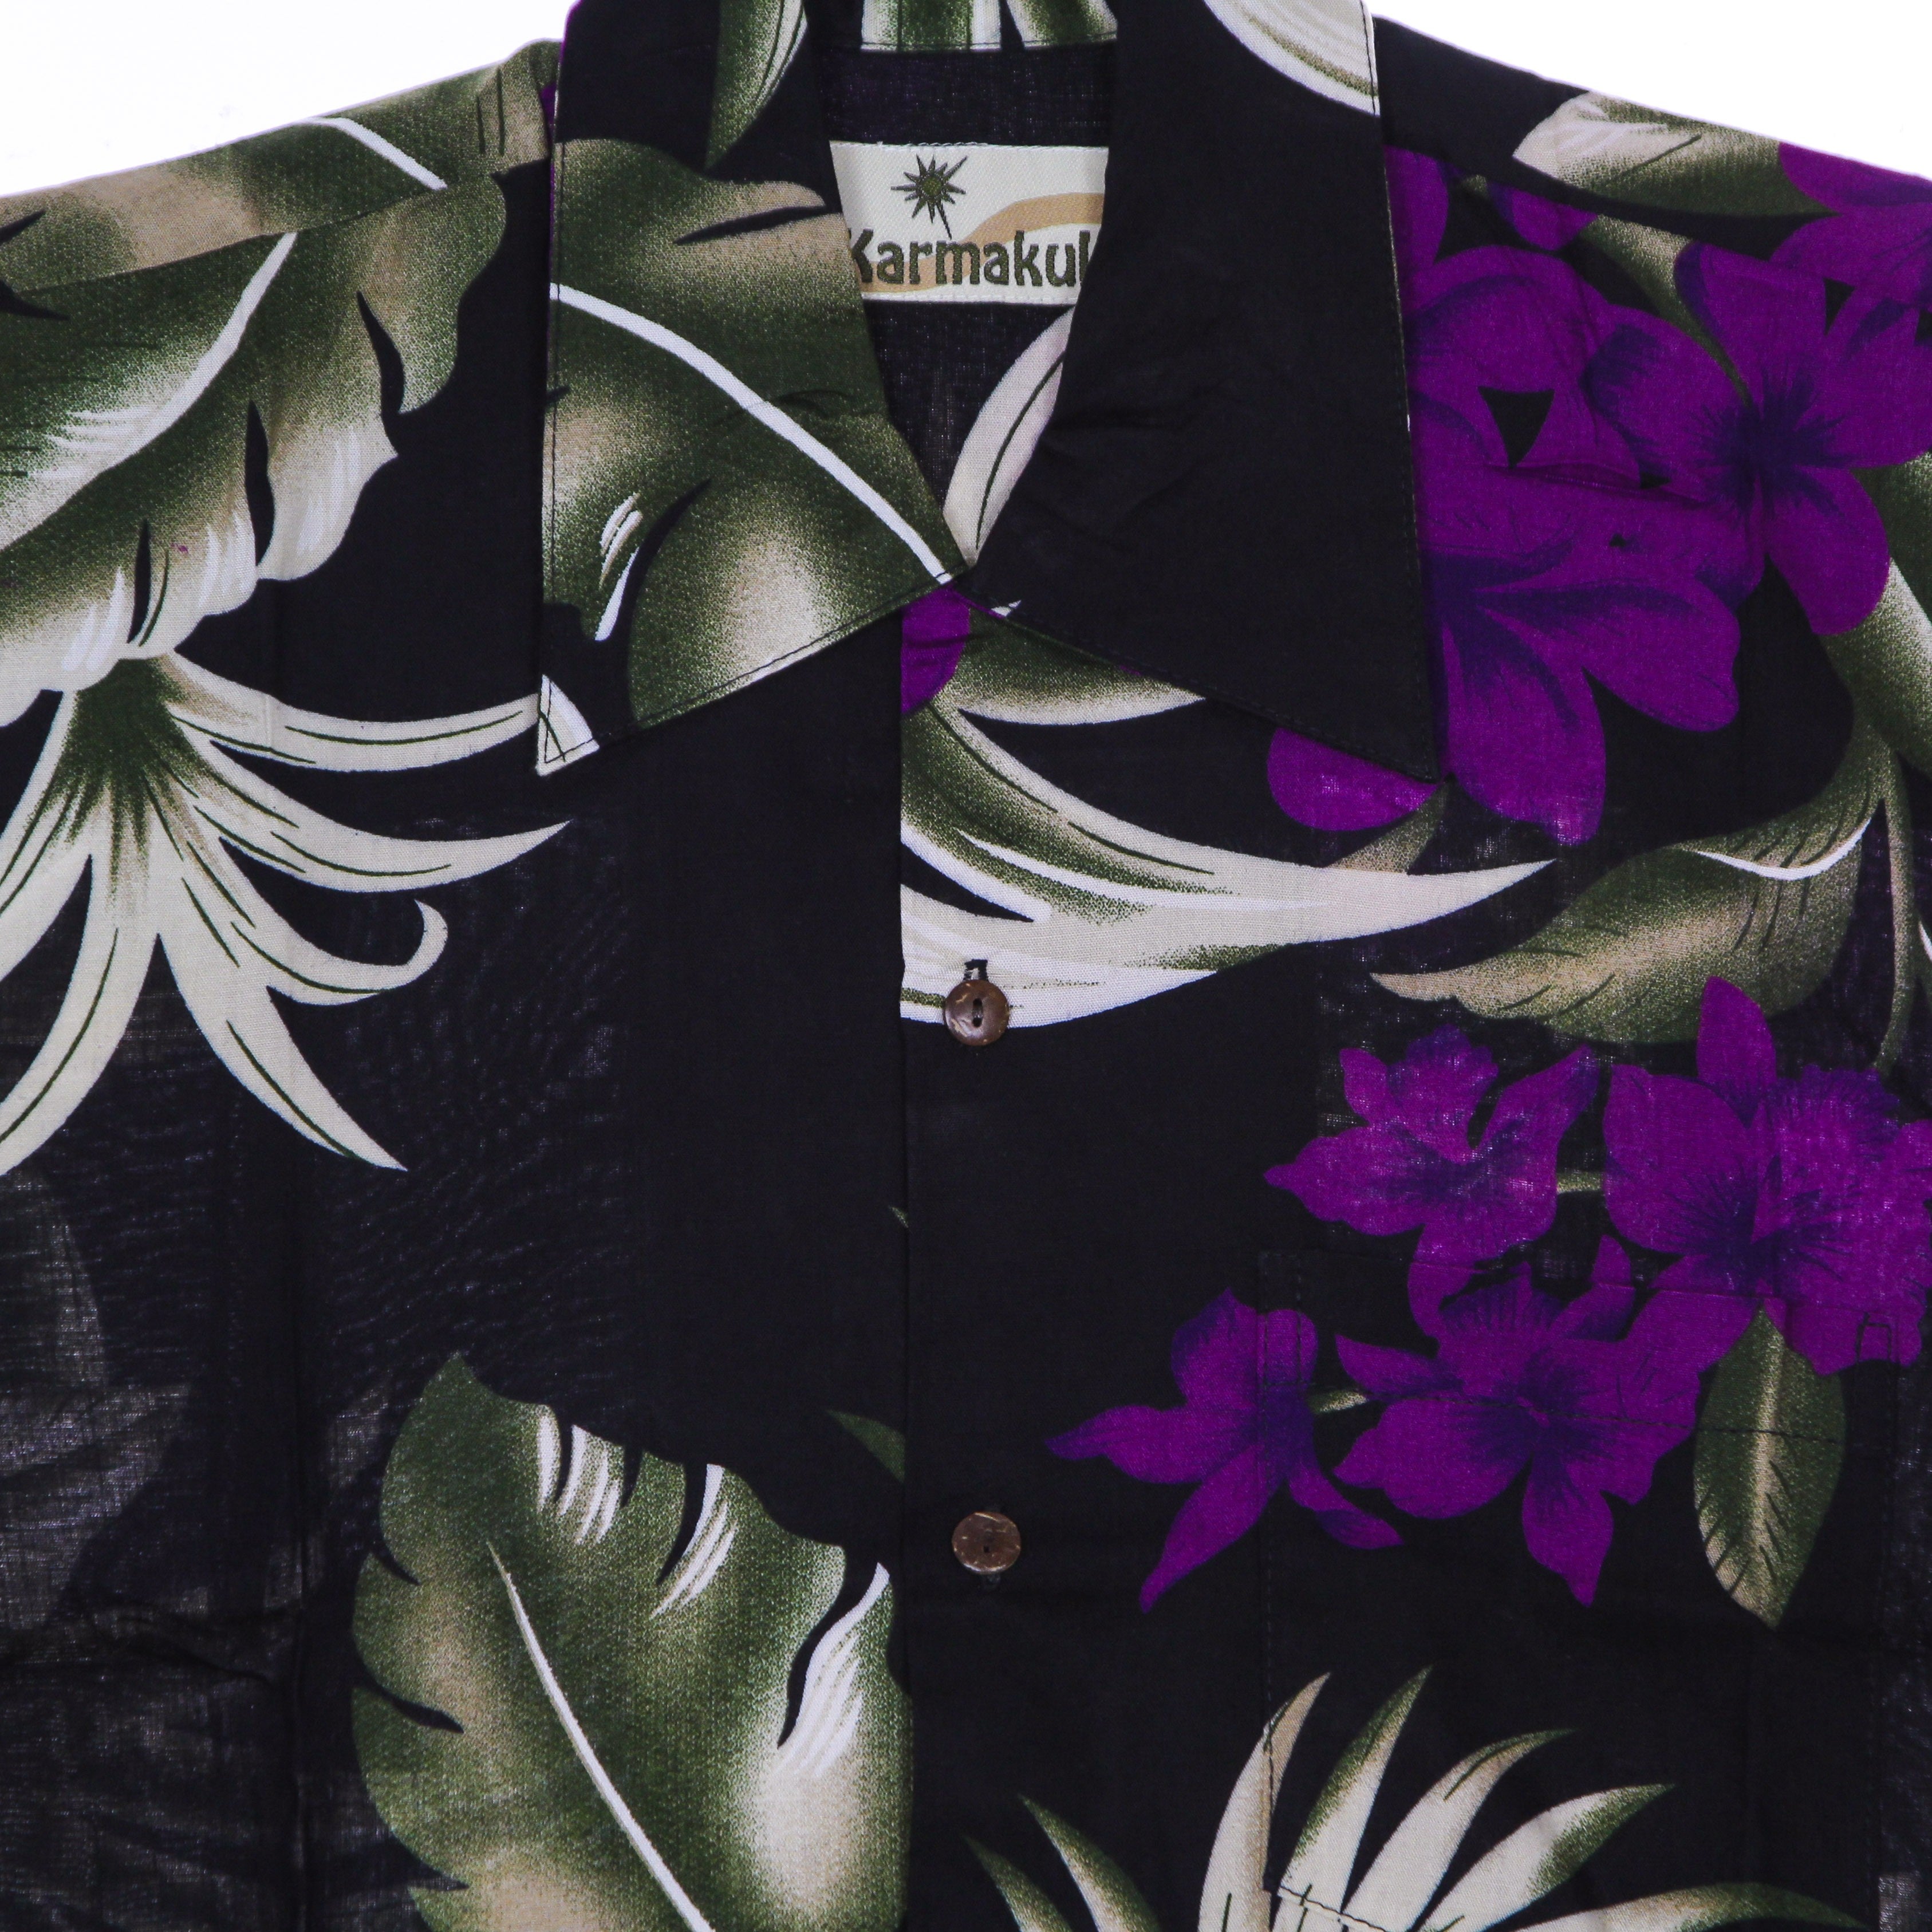 Camicia Manica Corta Uomo Hawaiian Shirt Formentera Purple